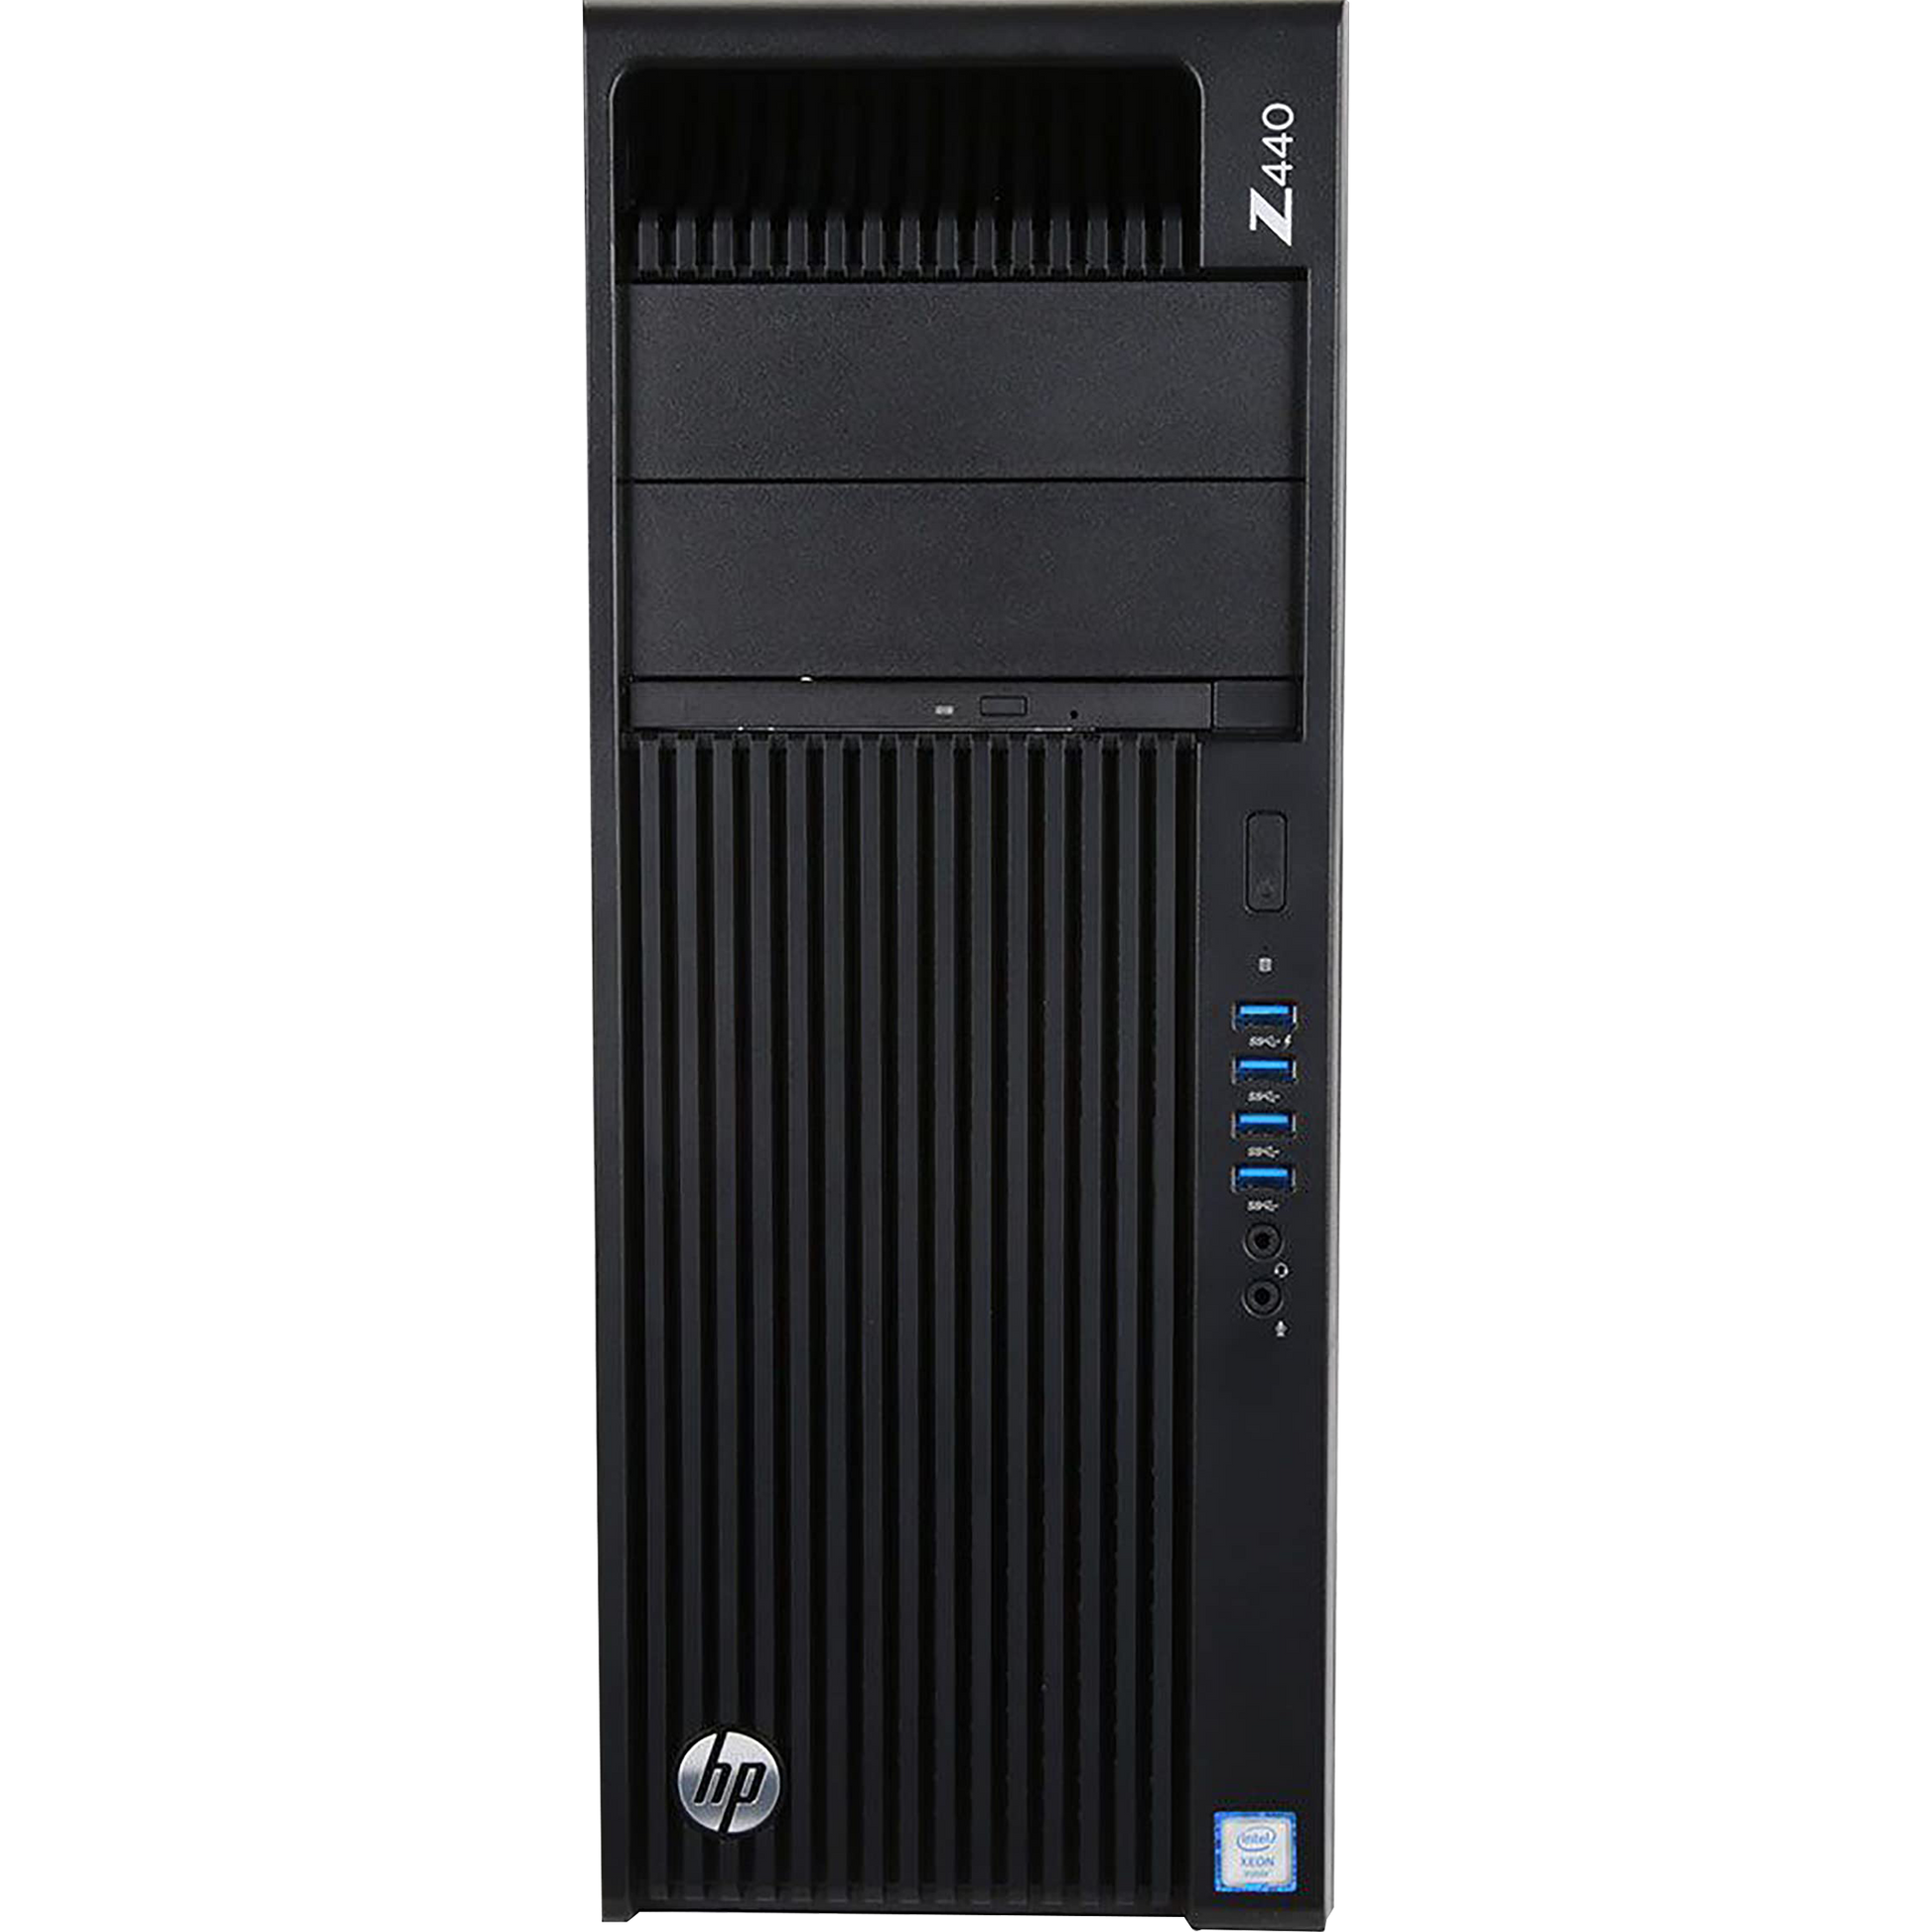 HP Z440 Workstation Intel Xeon Tower PC with 64GB Ram + 4GB GPU Desktop Computers